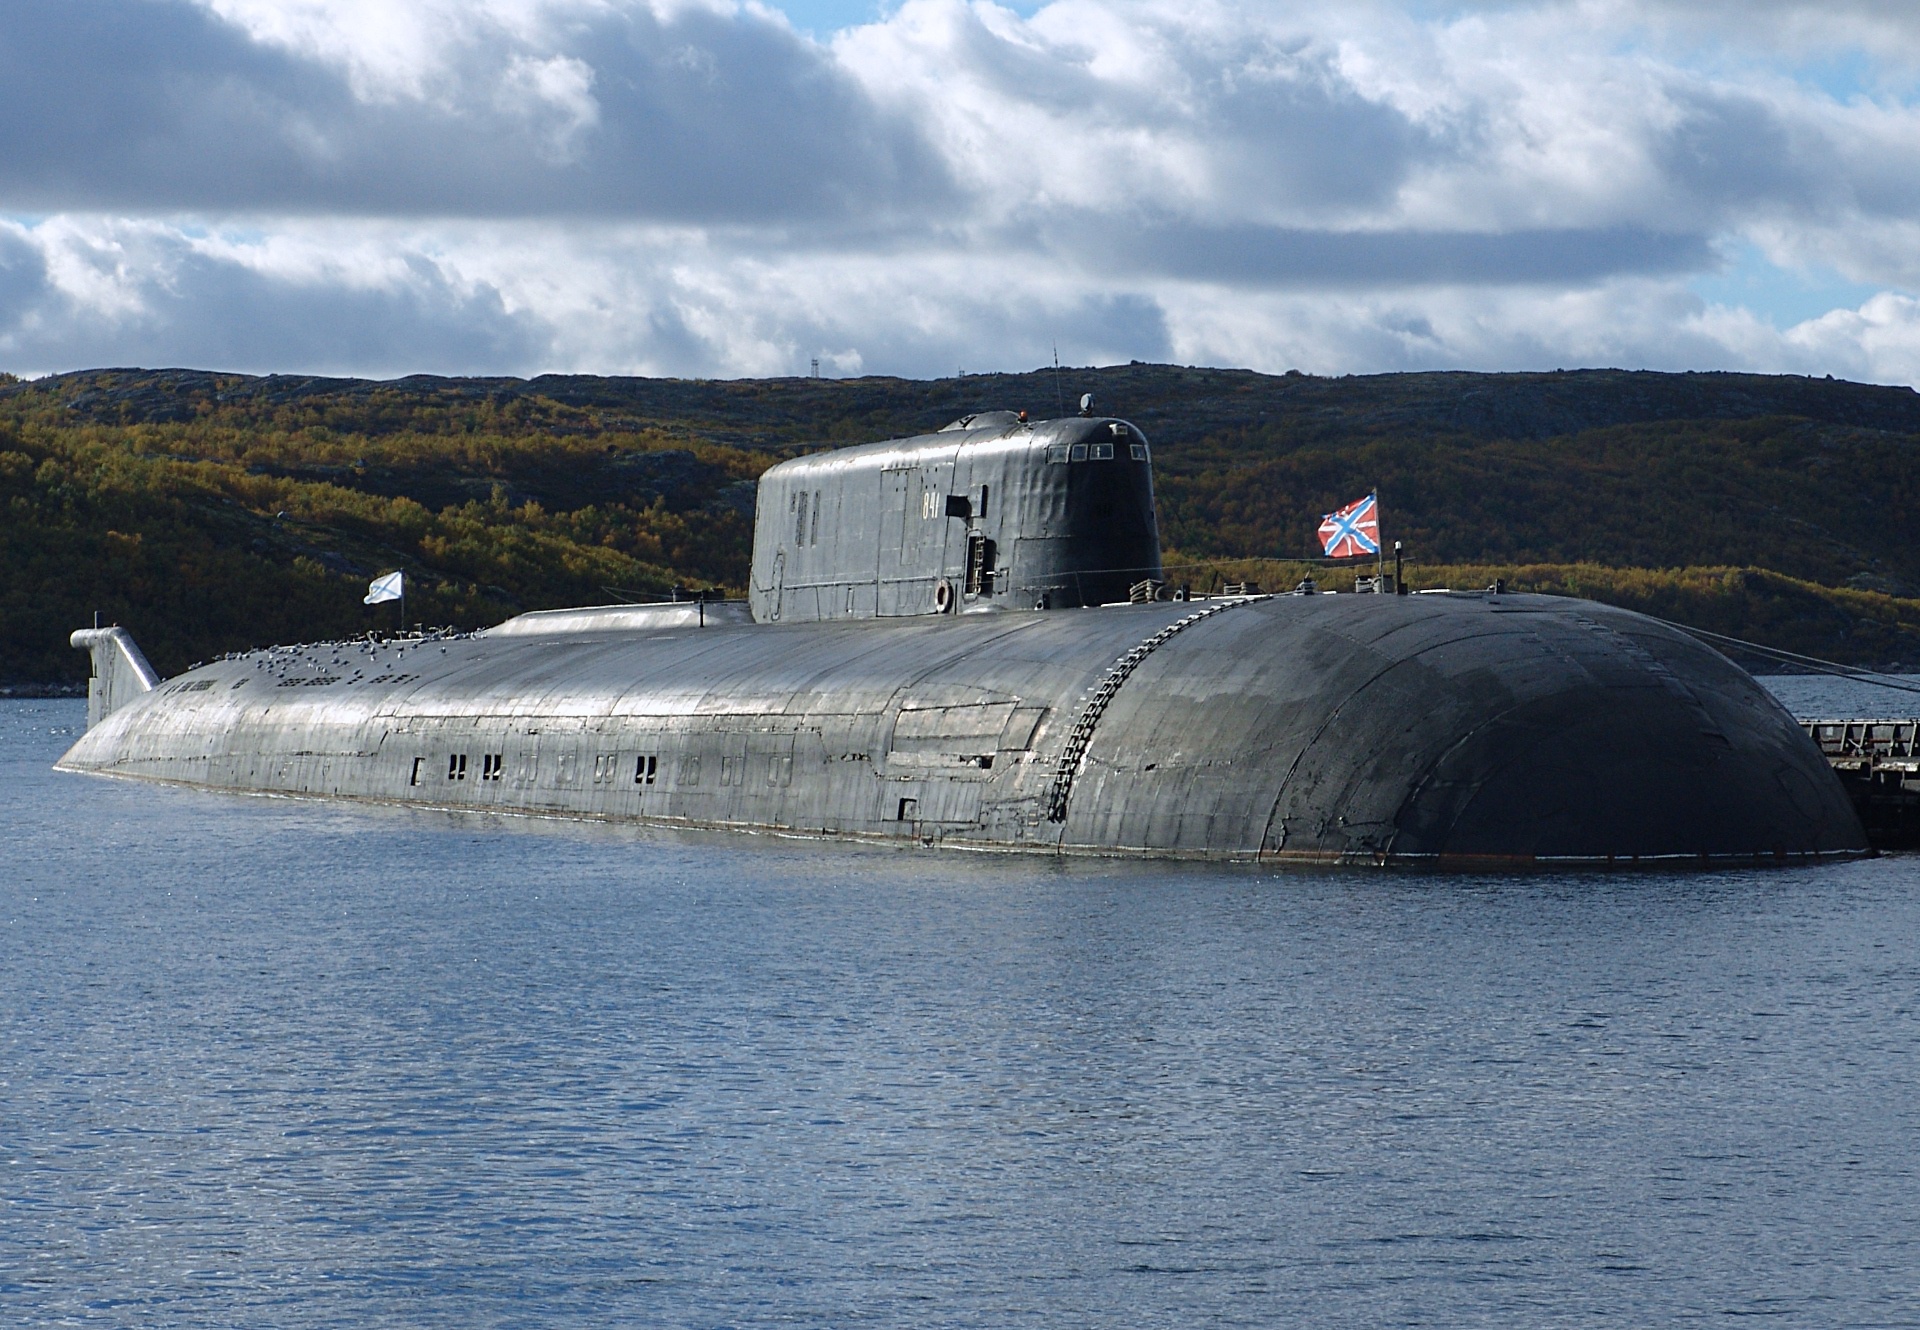 Пл пр т. Подводные лодки проекта 949. Лодки 949а Антей. Подводная лодка 949а Антей. Подлодка Антей проекта 949а.